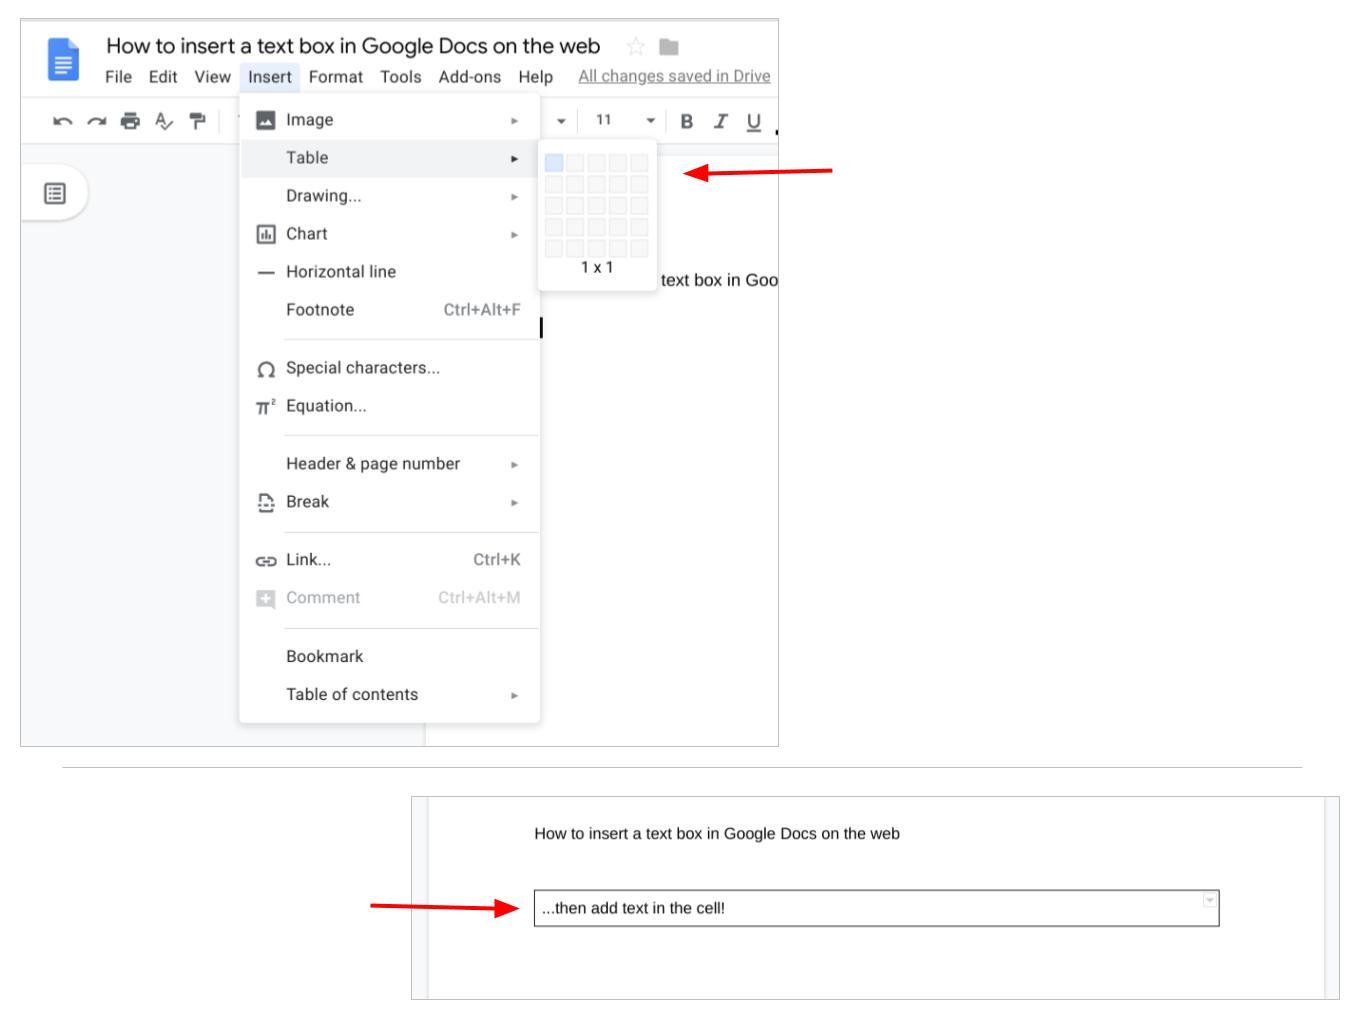 How to insert a text box in Google Docs - TechRepublic